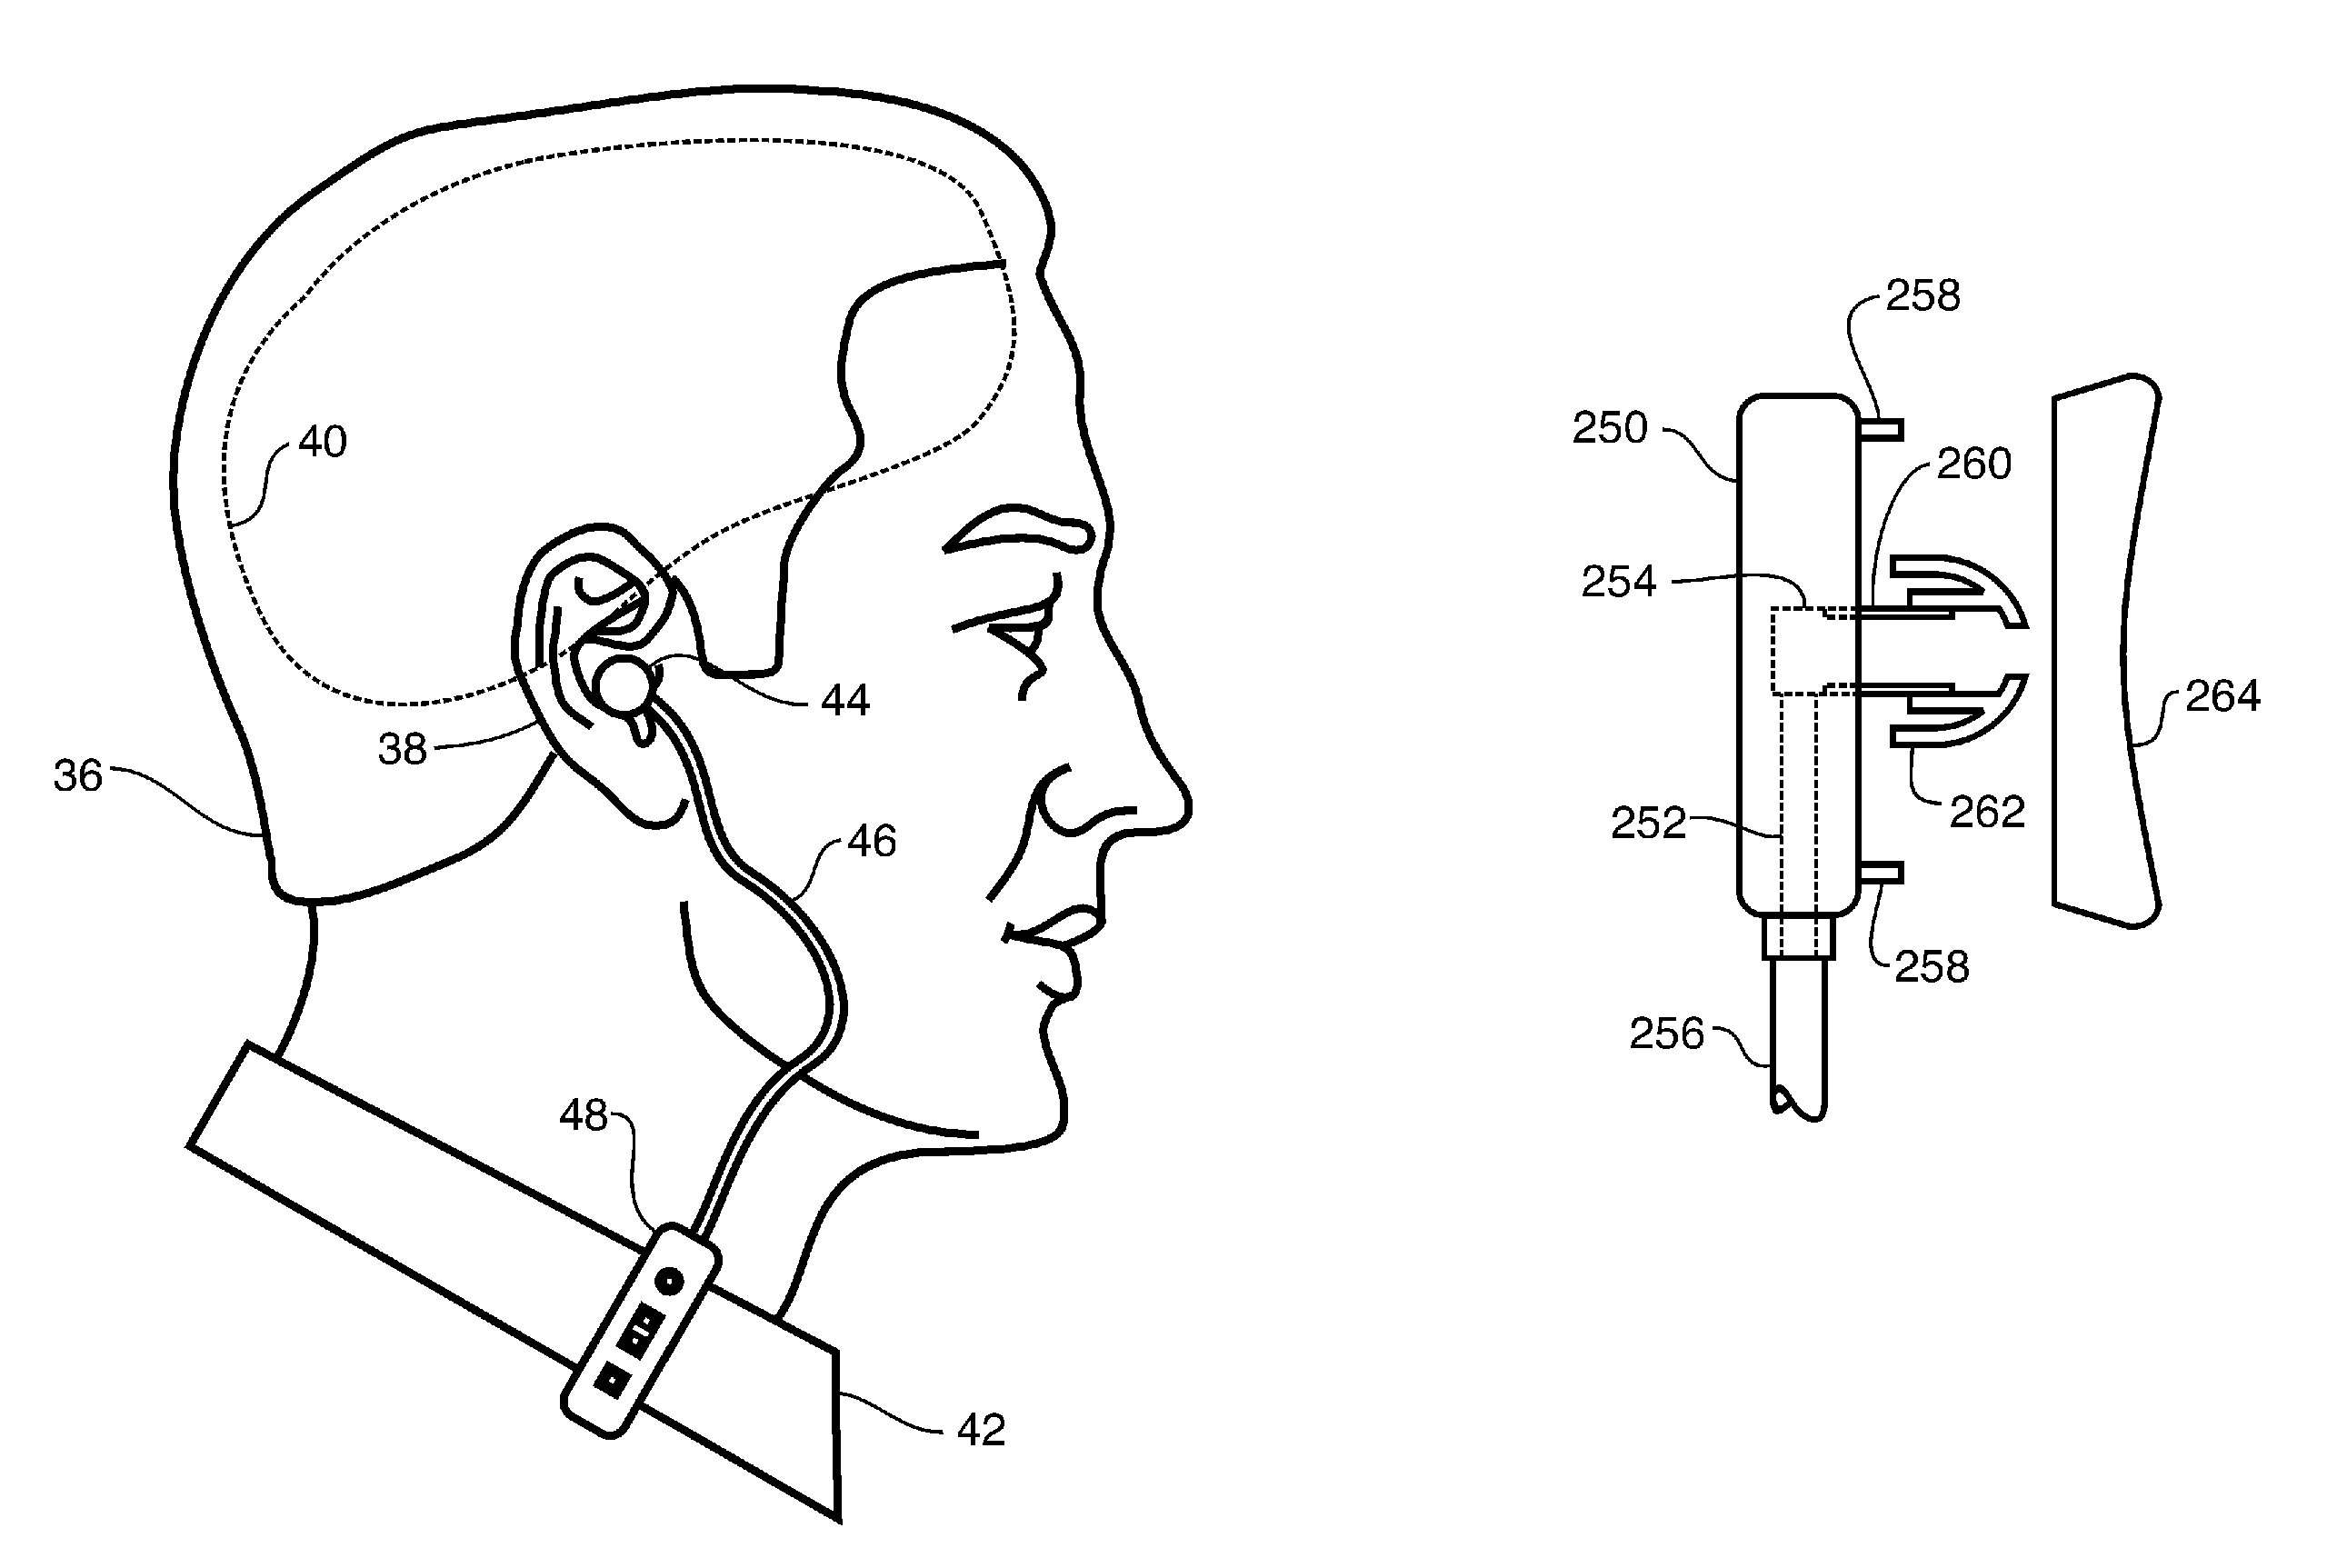 Wireless air tube headset